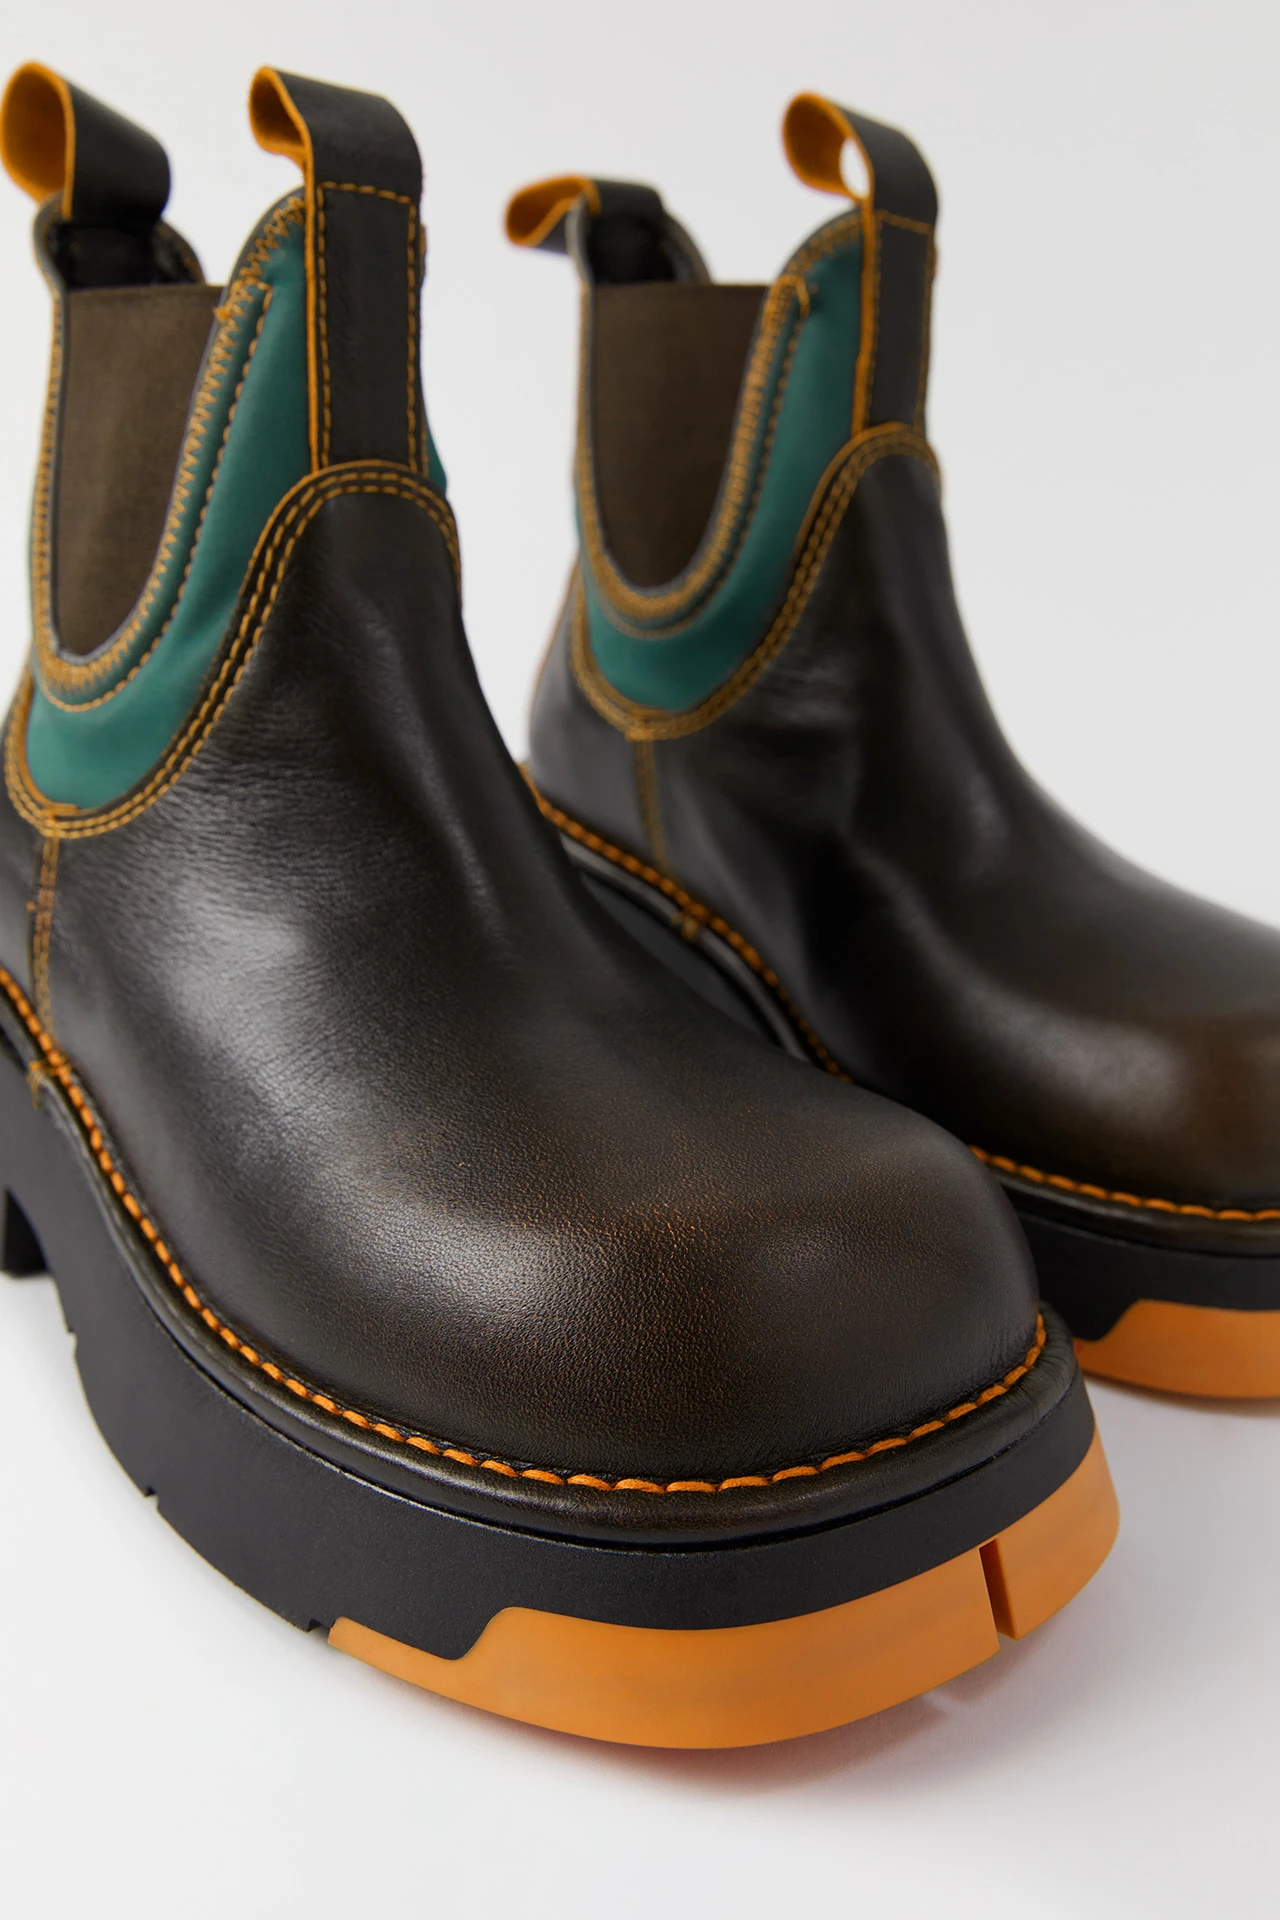 miista-kaya-brown-orange-ankle-boots-05